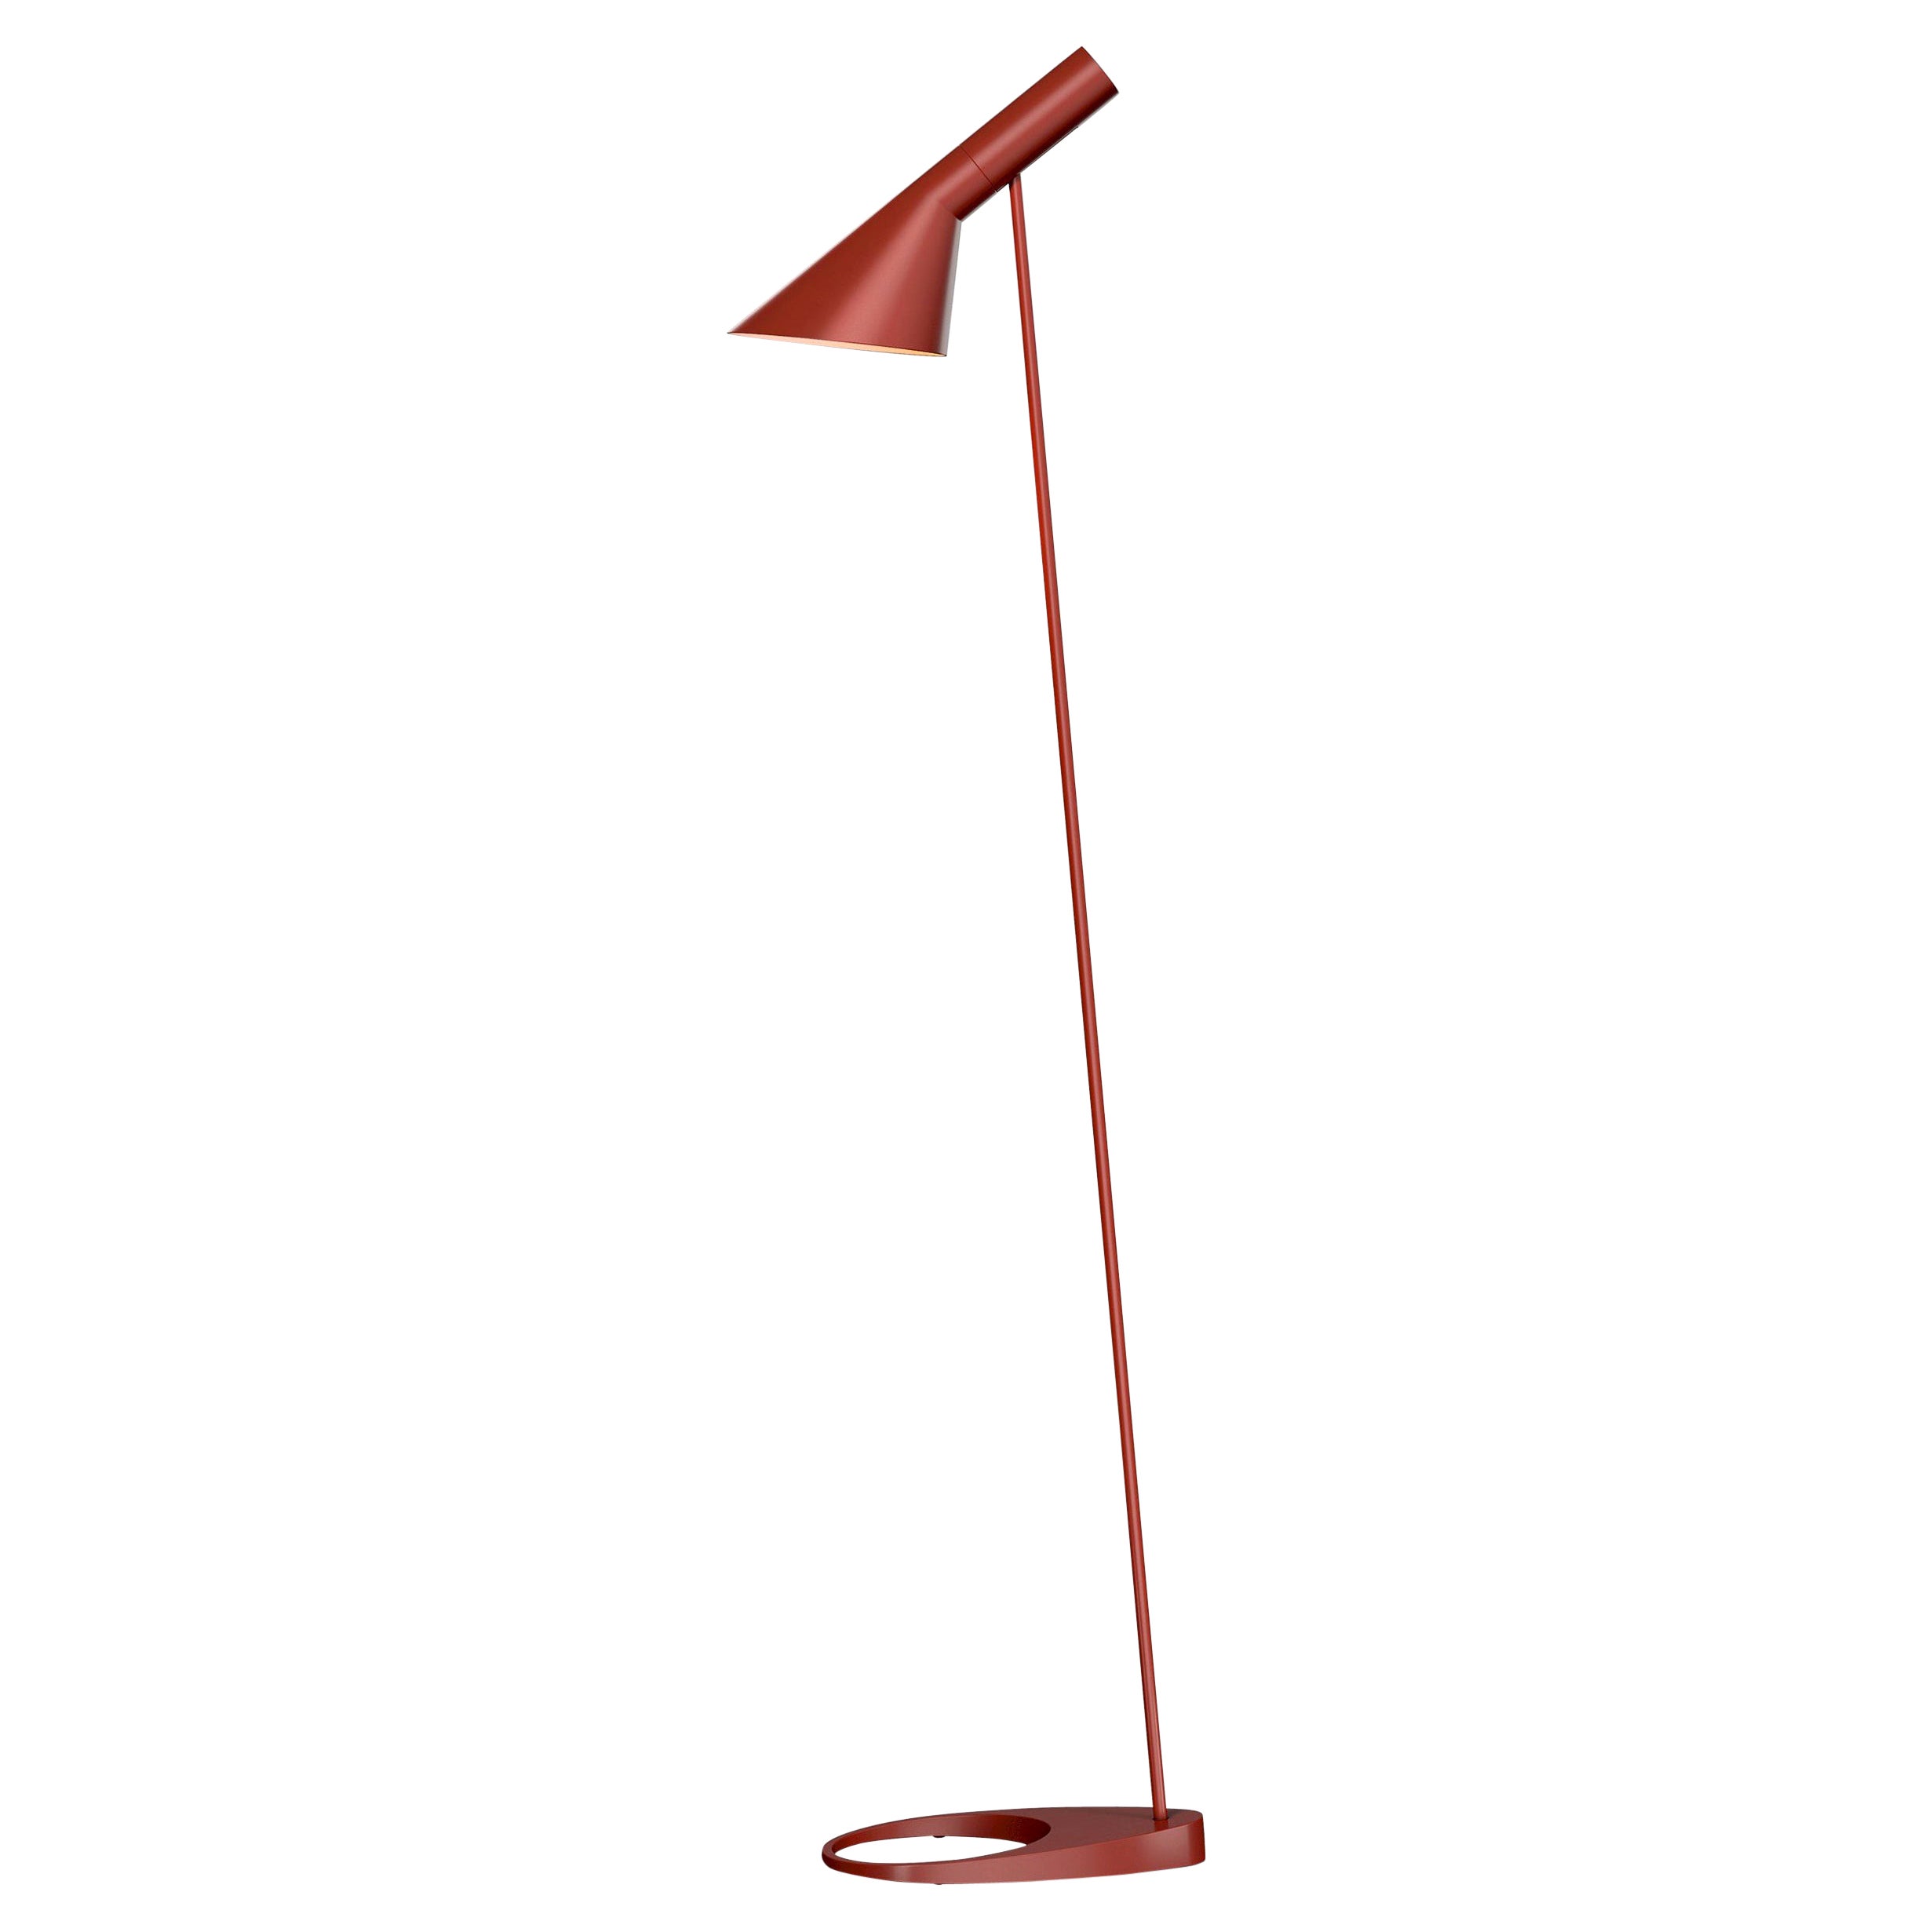 Arne Jacobsen AJ Floor Lamp in Red for Louis Poulsen